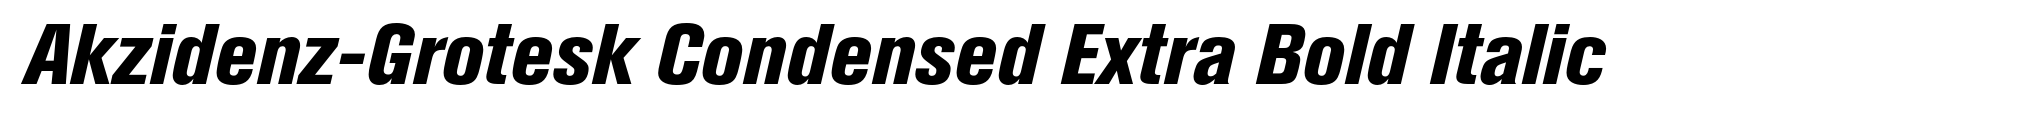 Akzidenz-Grotesk Condensed Extra Bold Italic image